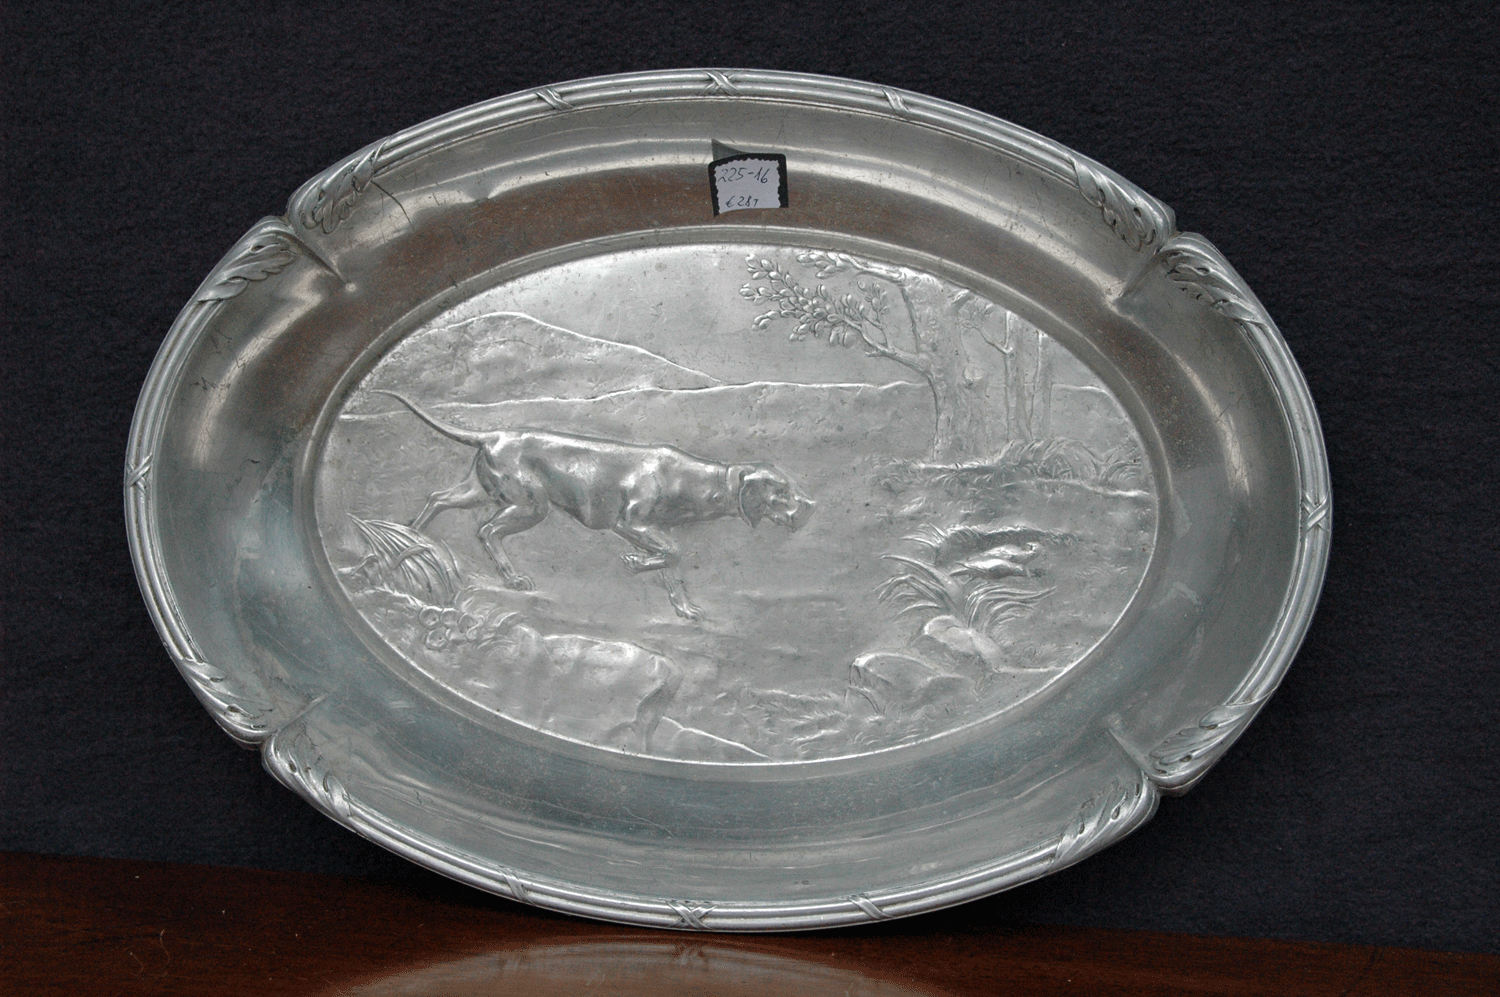 Ovale Schale mit Jagdszene, Vorstehhund, Aluminium, l= 35 cm